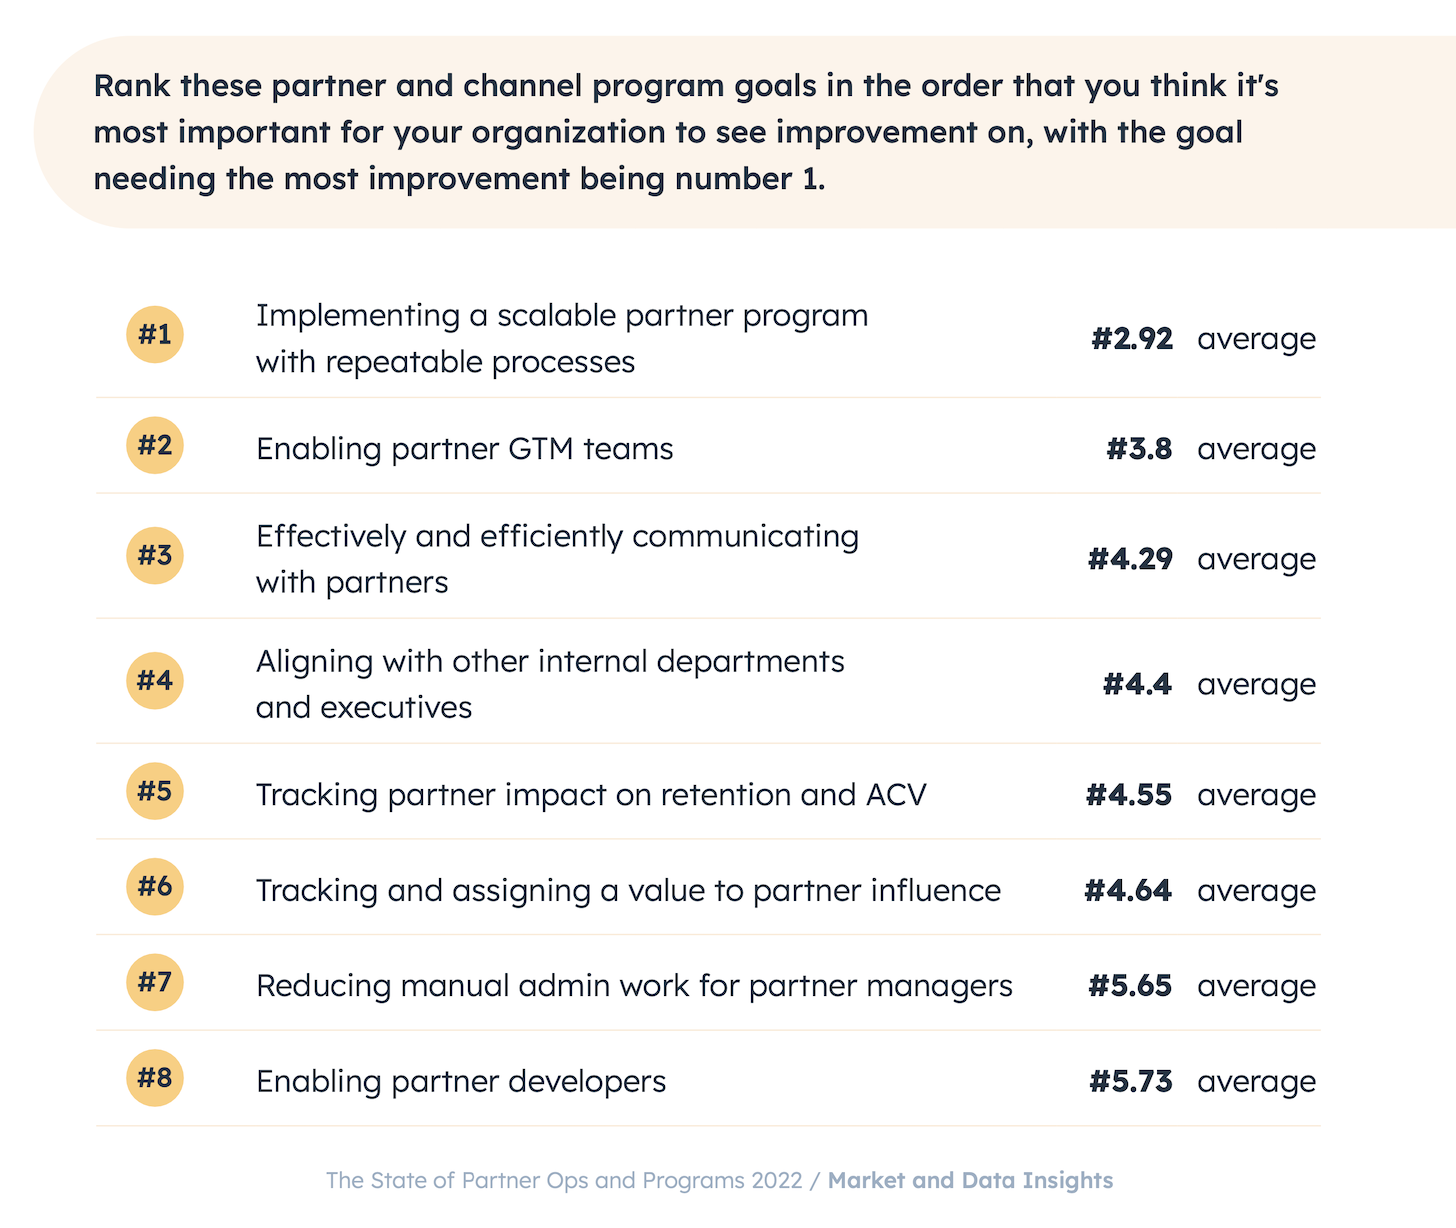 Partner Program Improvement Goals: What Should Partner Ops Do?